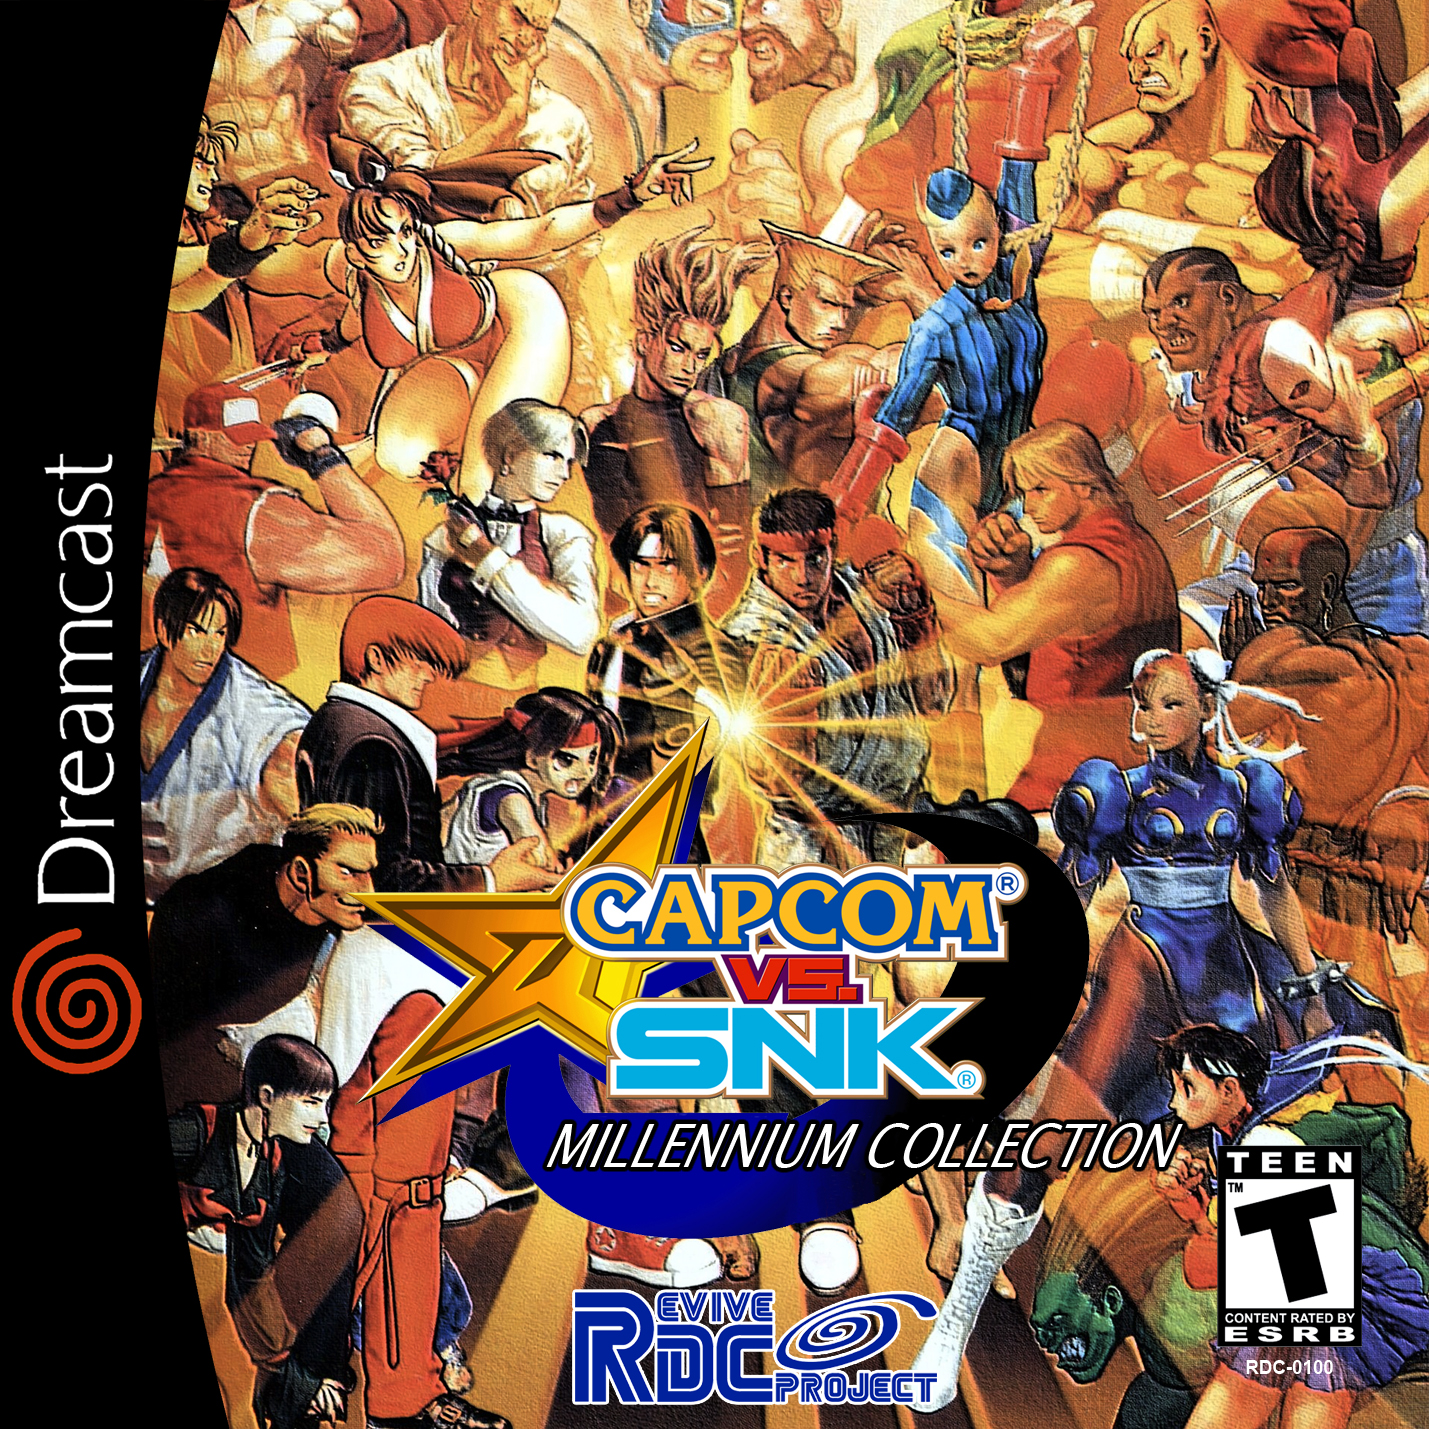 The coverart image of Capcom vs. SNK Millennium Collection